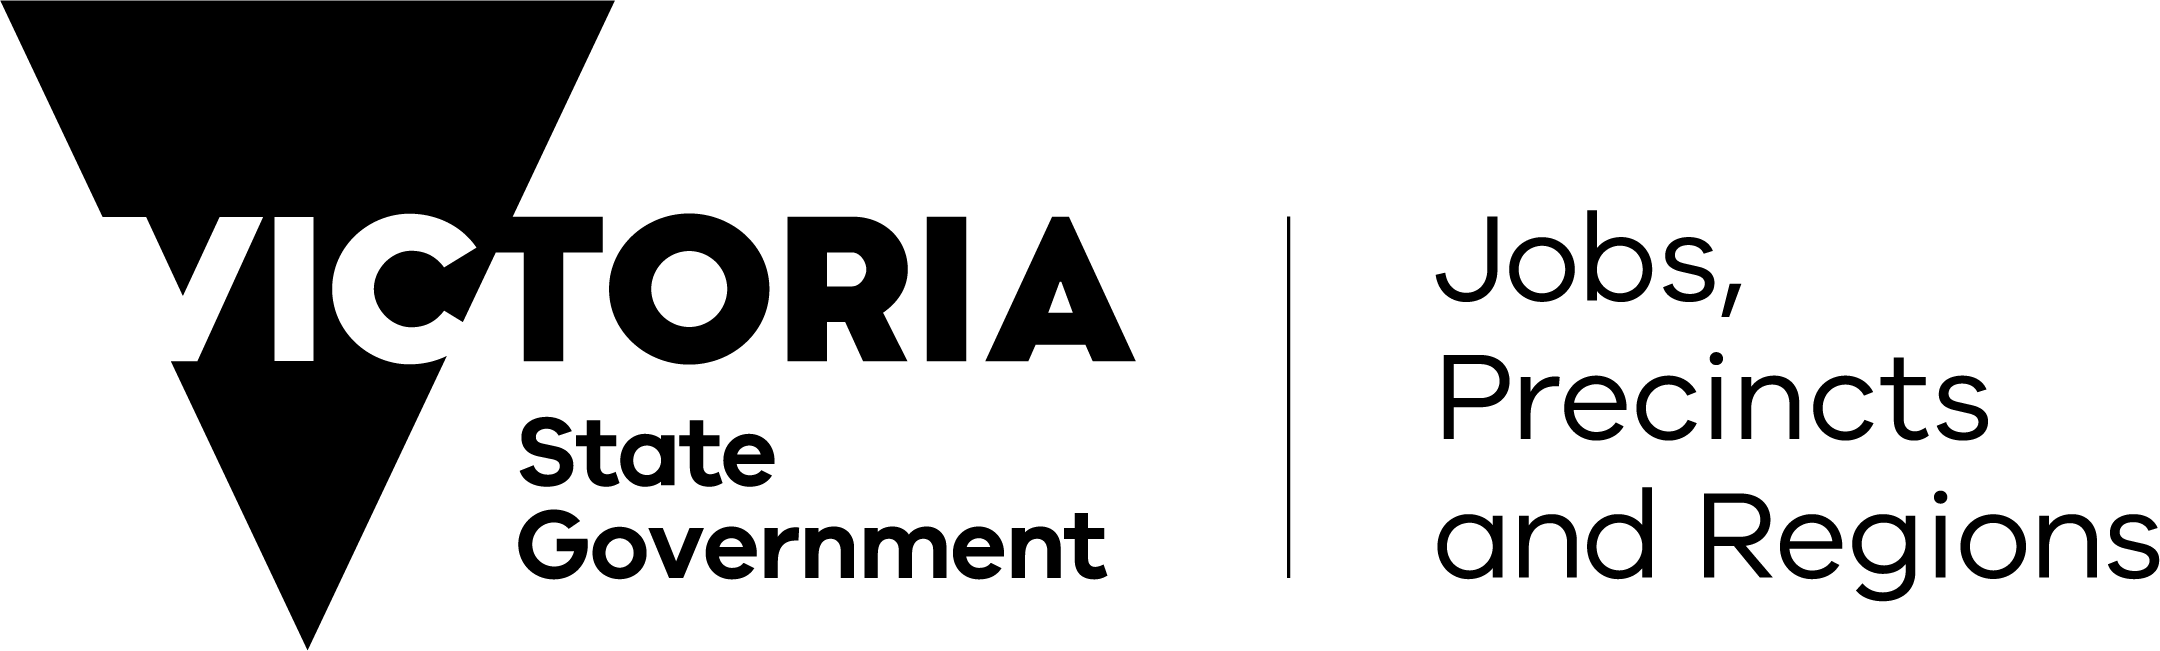 State of Victoria Logo